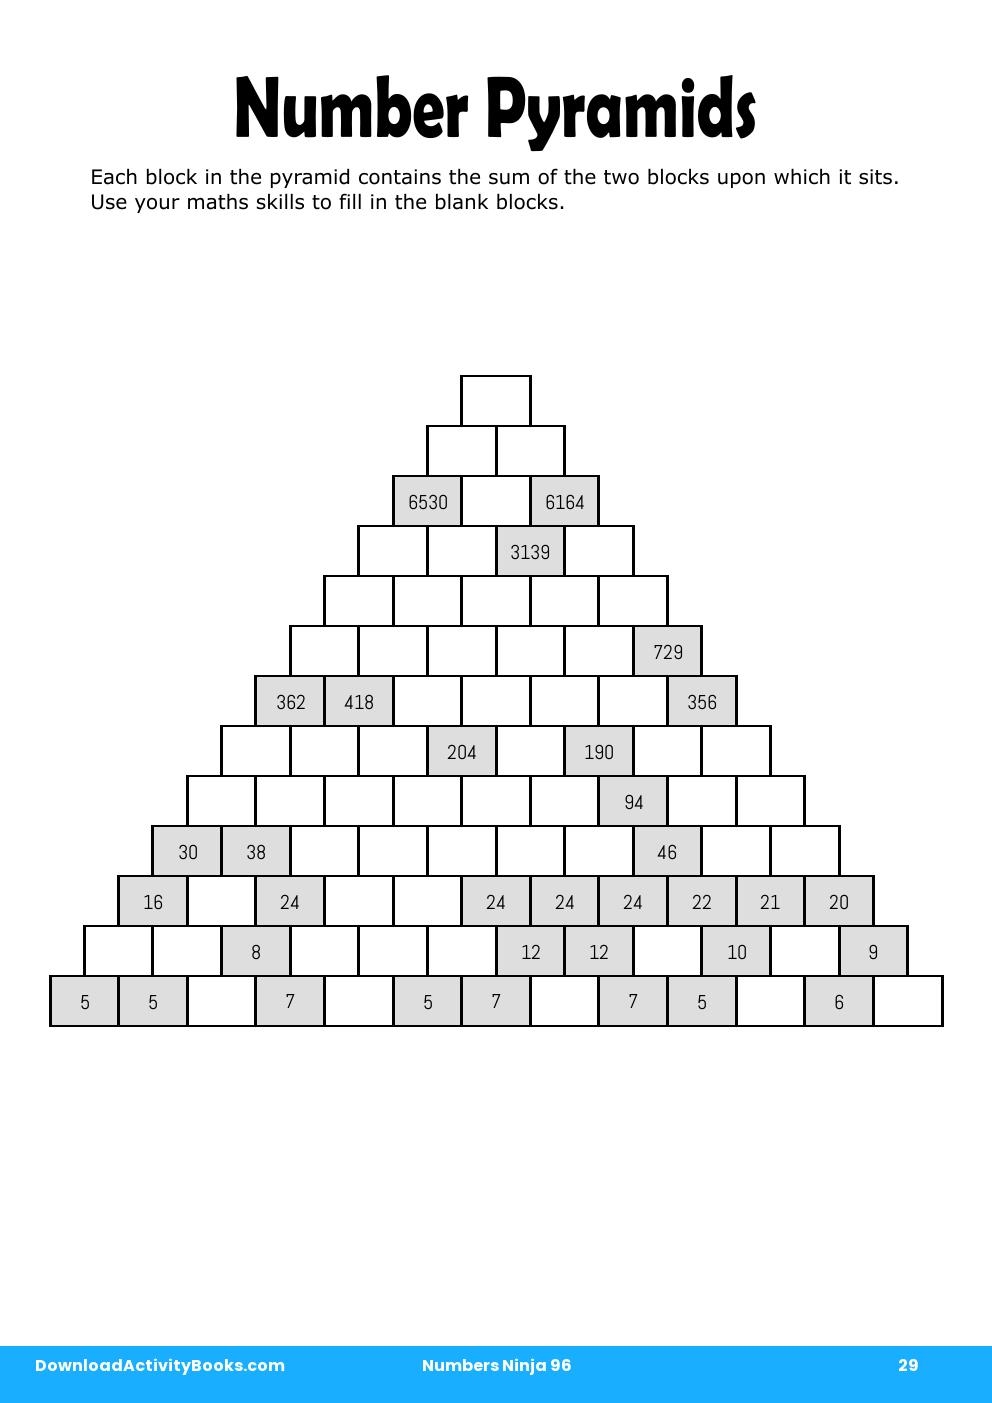 Number Pyramids in Numbers Ninja 96